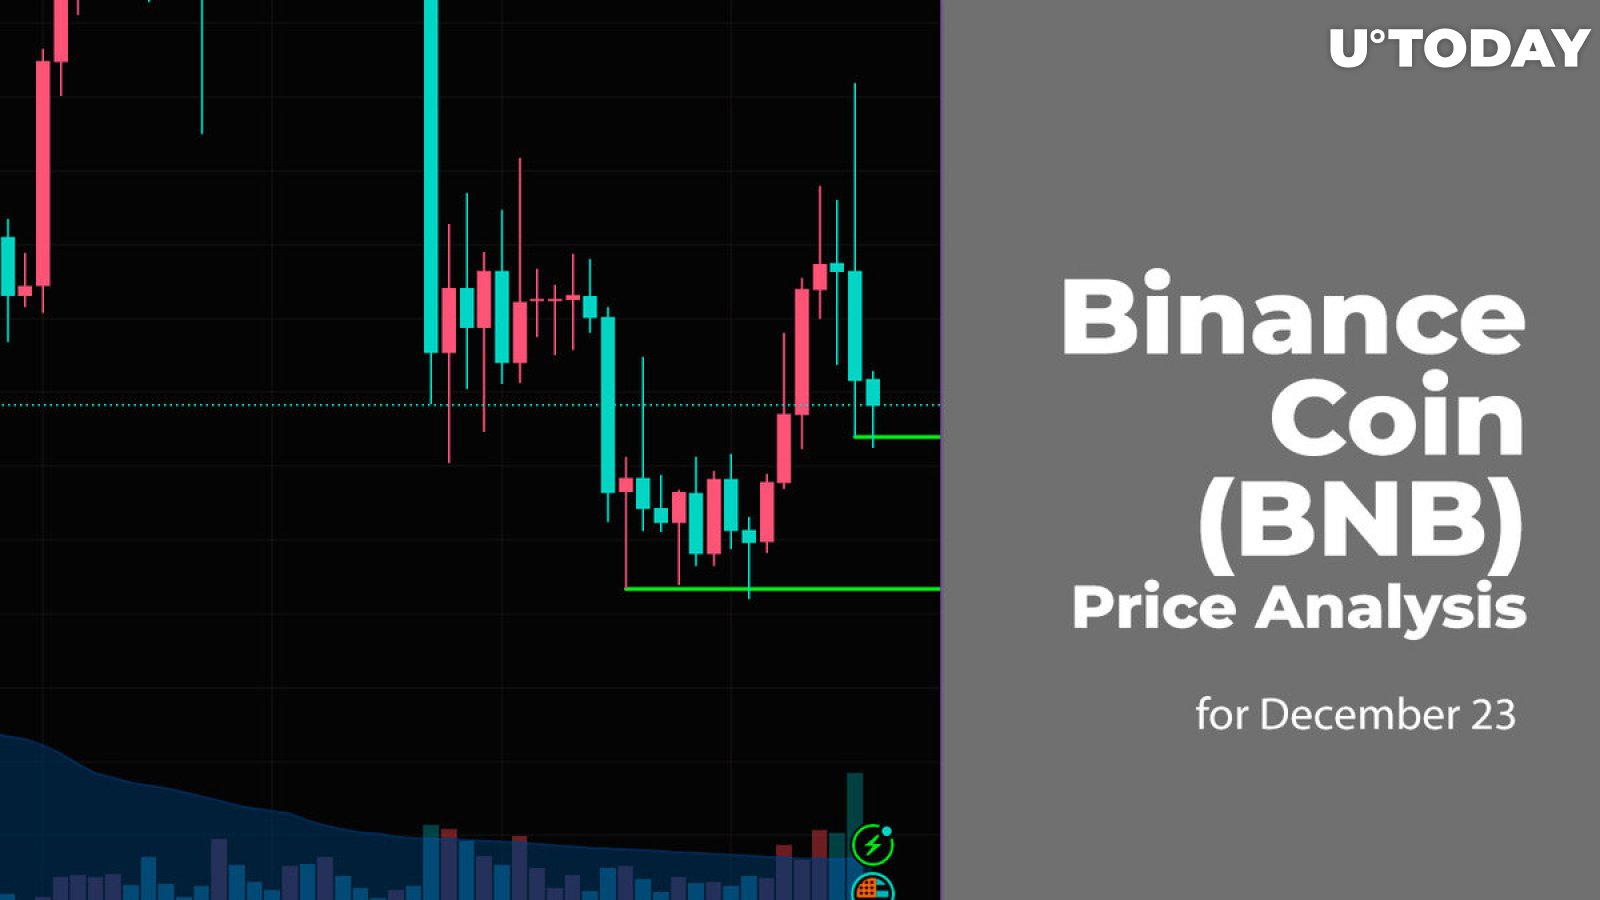 Binance Coin (BNB) Price Analysis for December 23